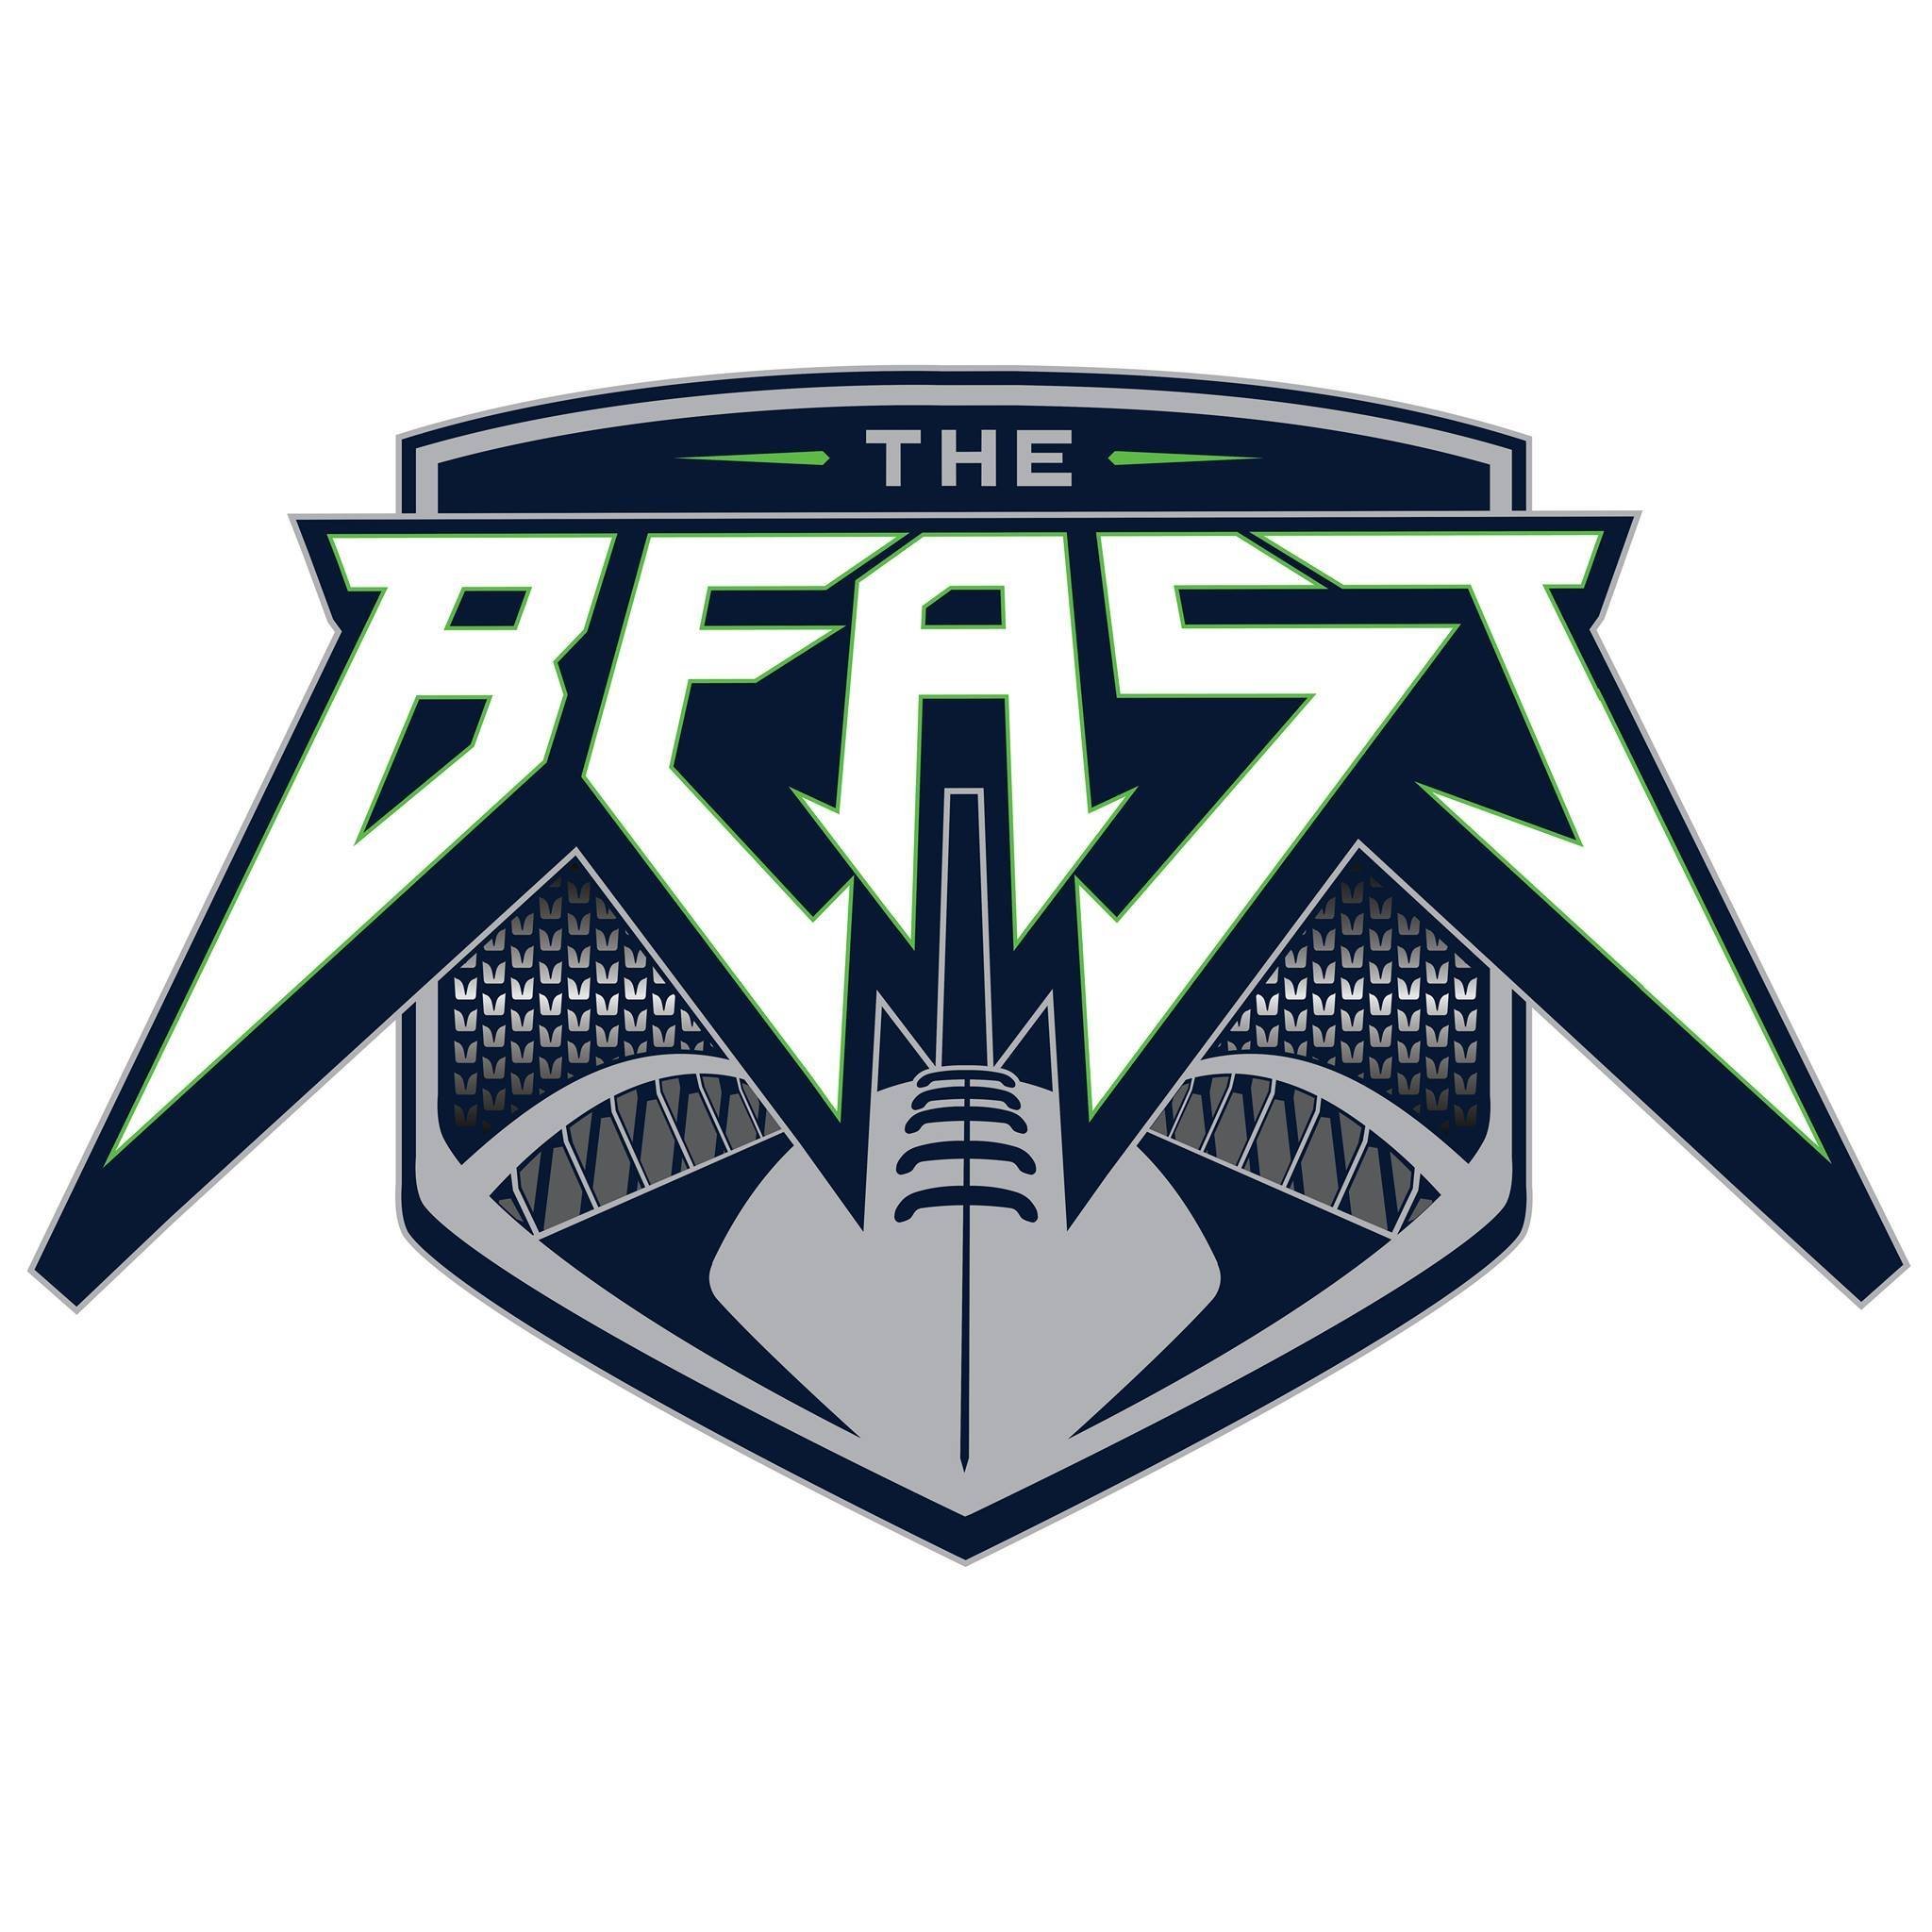 Beast bus logo.jpg